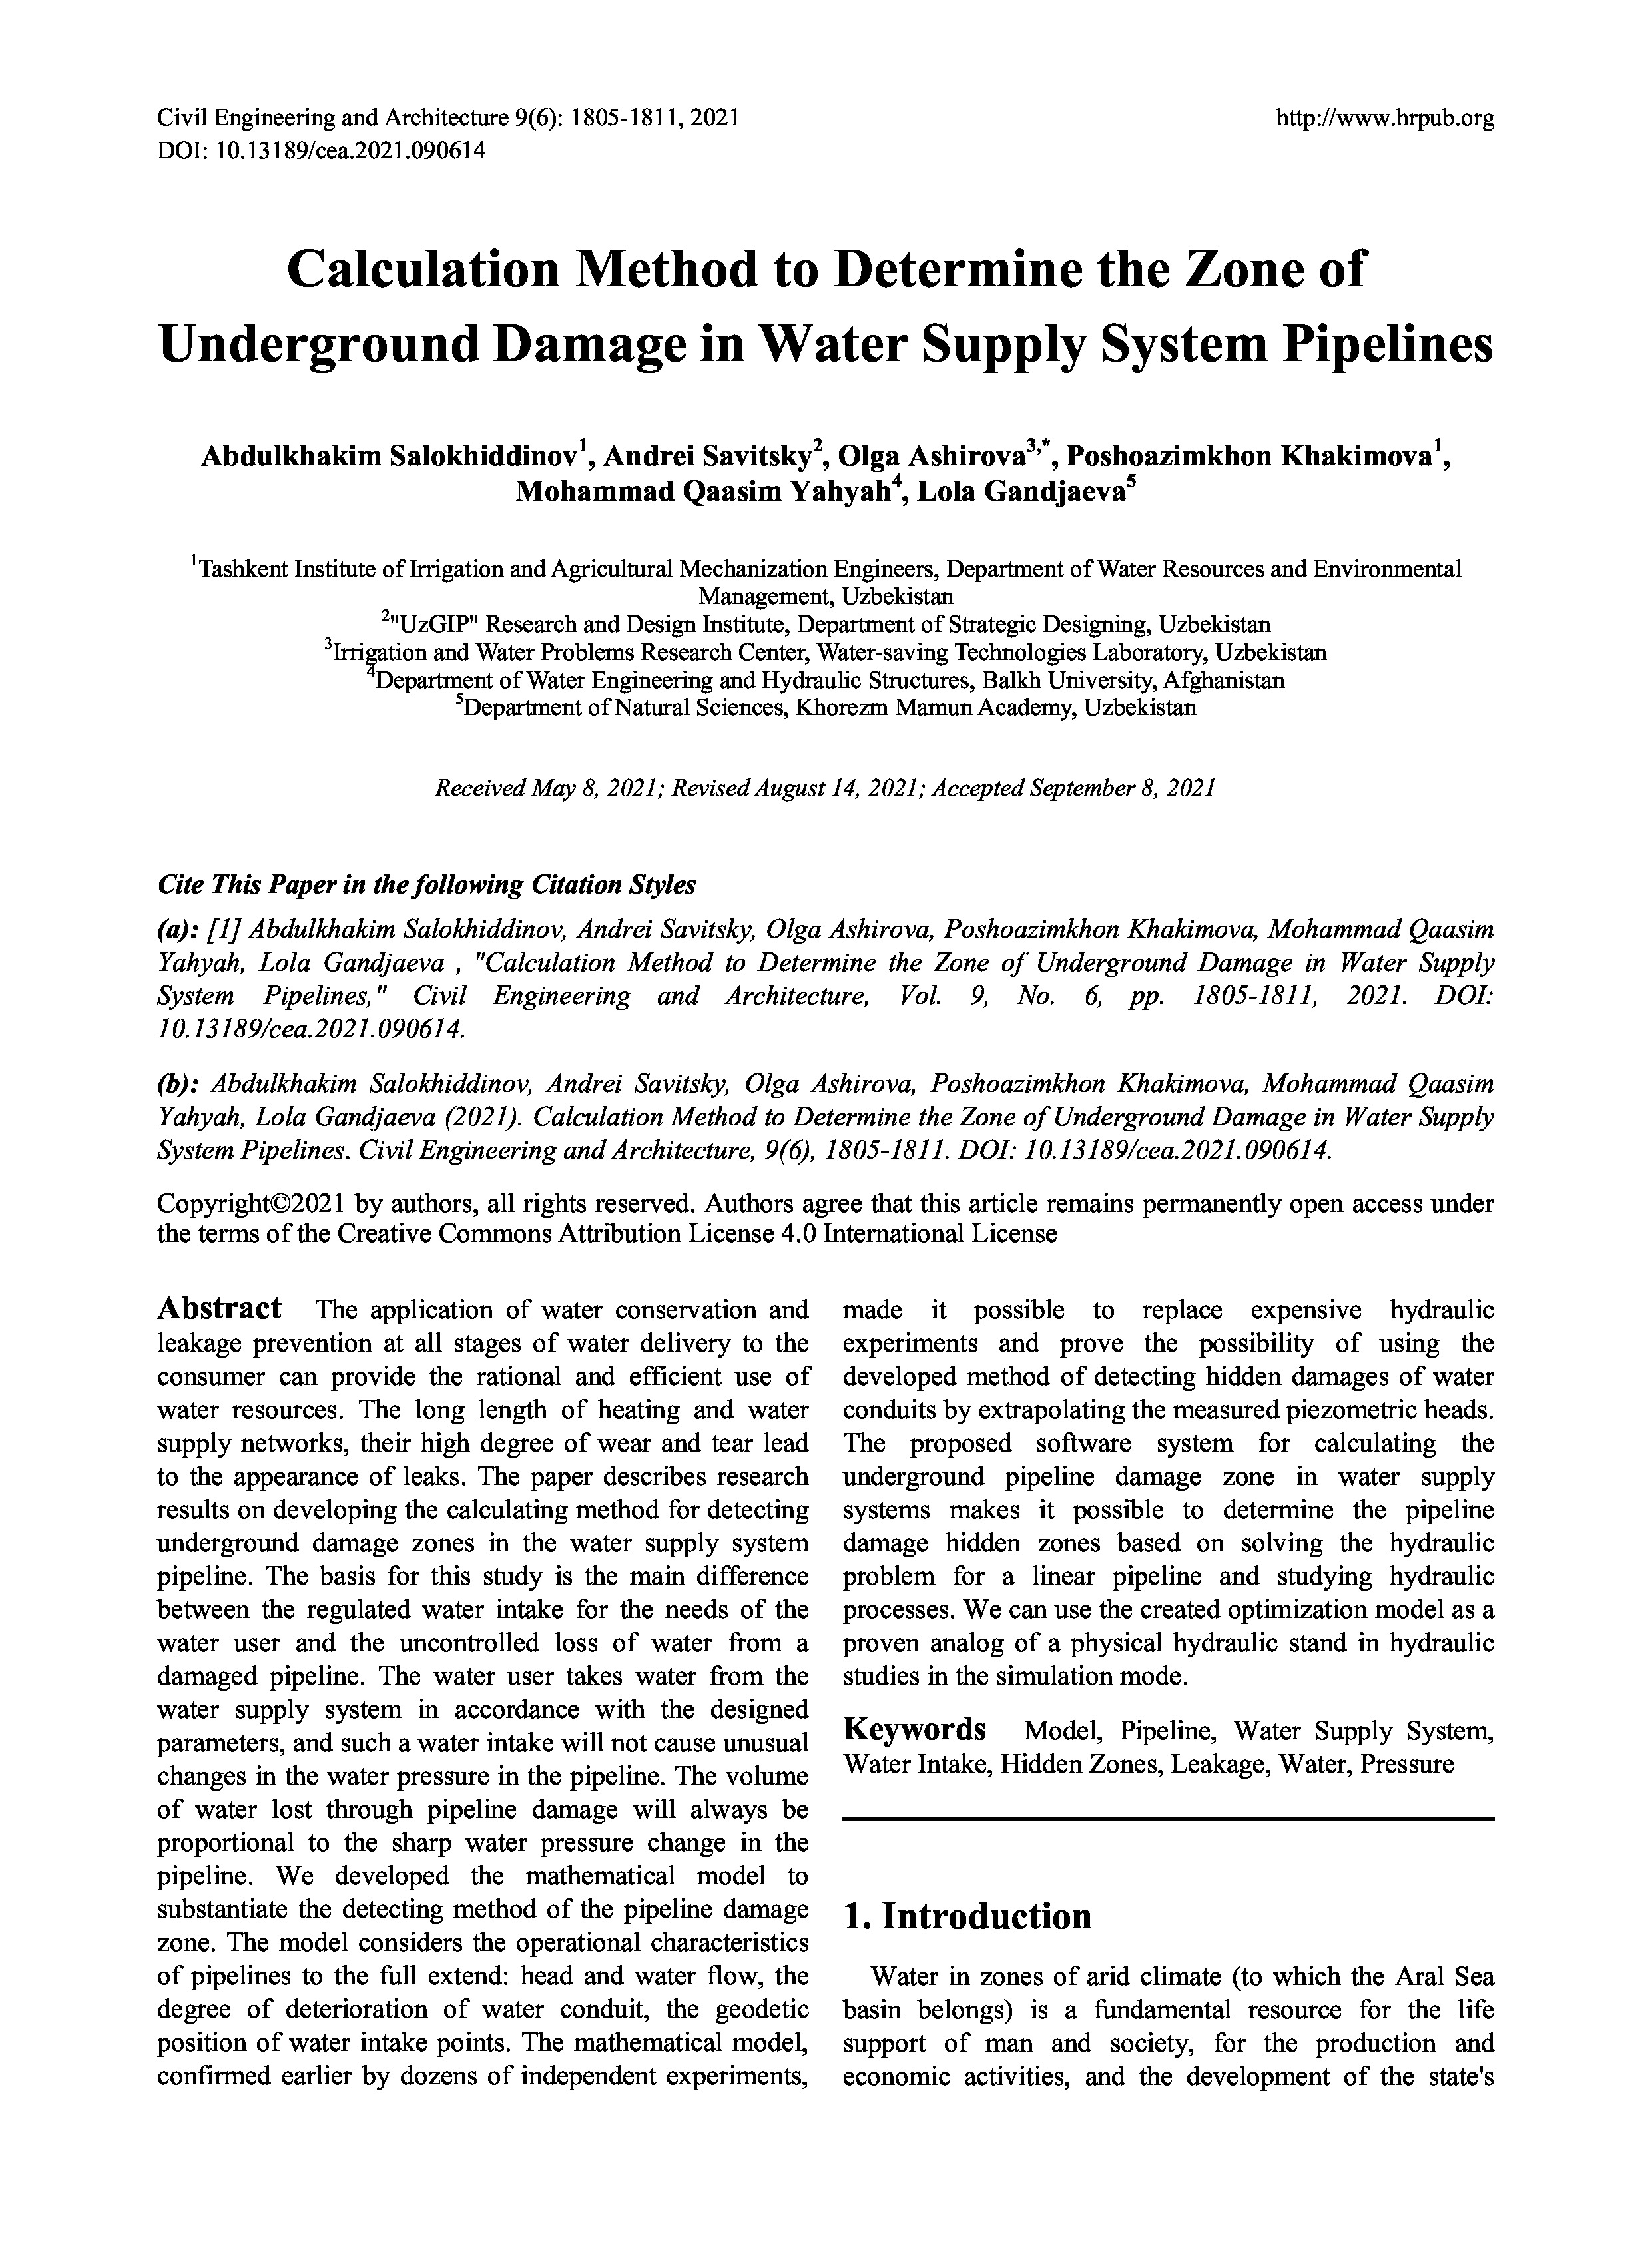 Calculation Method to Determine the Zone of Underground Damage in Water Supply System Pipelines | A.Salokhiddinov, A.Savitsky, O.Ashirova, P.Khakimova, M.Qaasim Yahyah, L.Gandjaeva